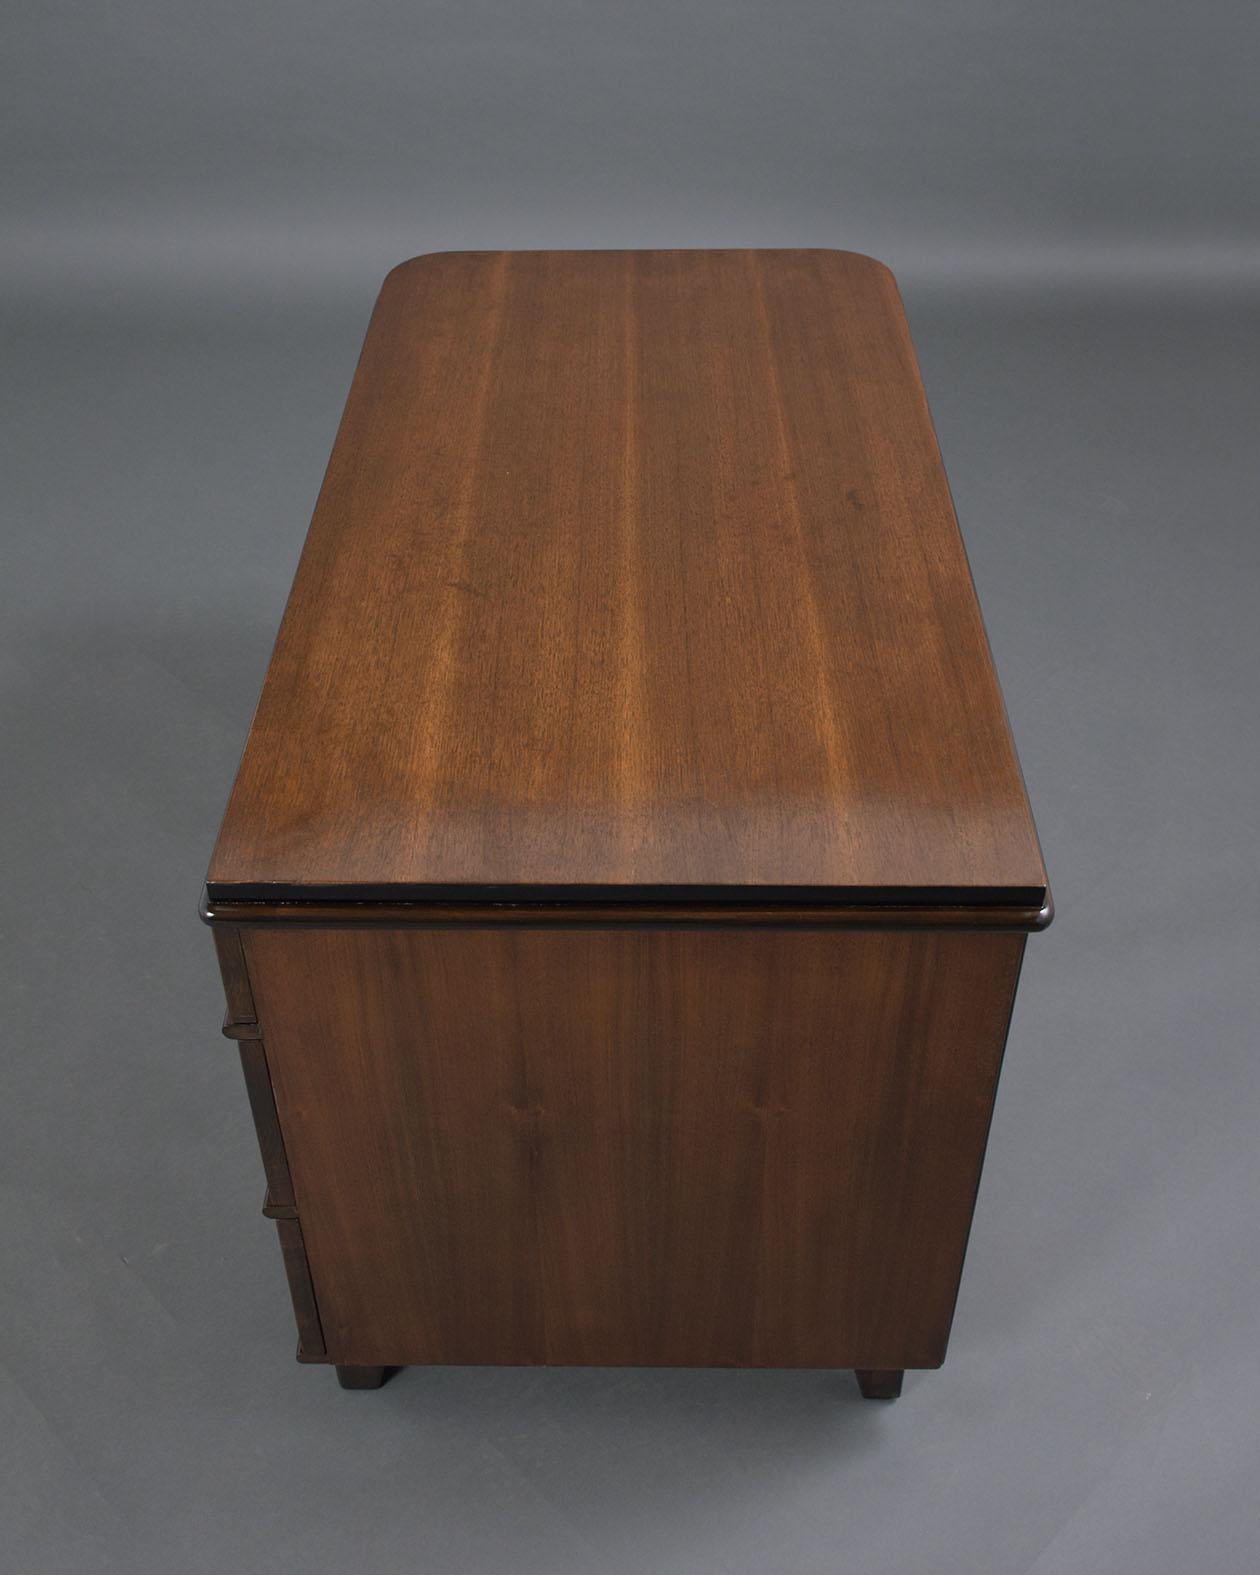 1950s Art Deco Pedestal Desk in Walnut & Ebonized Finish with Brass Accents For Sale 6